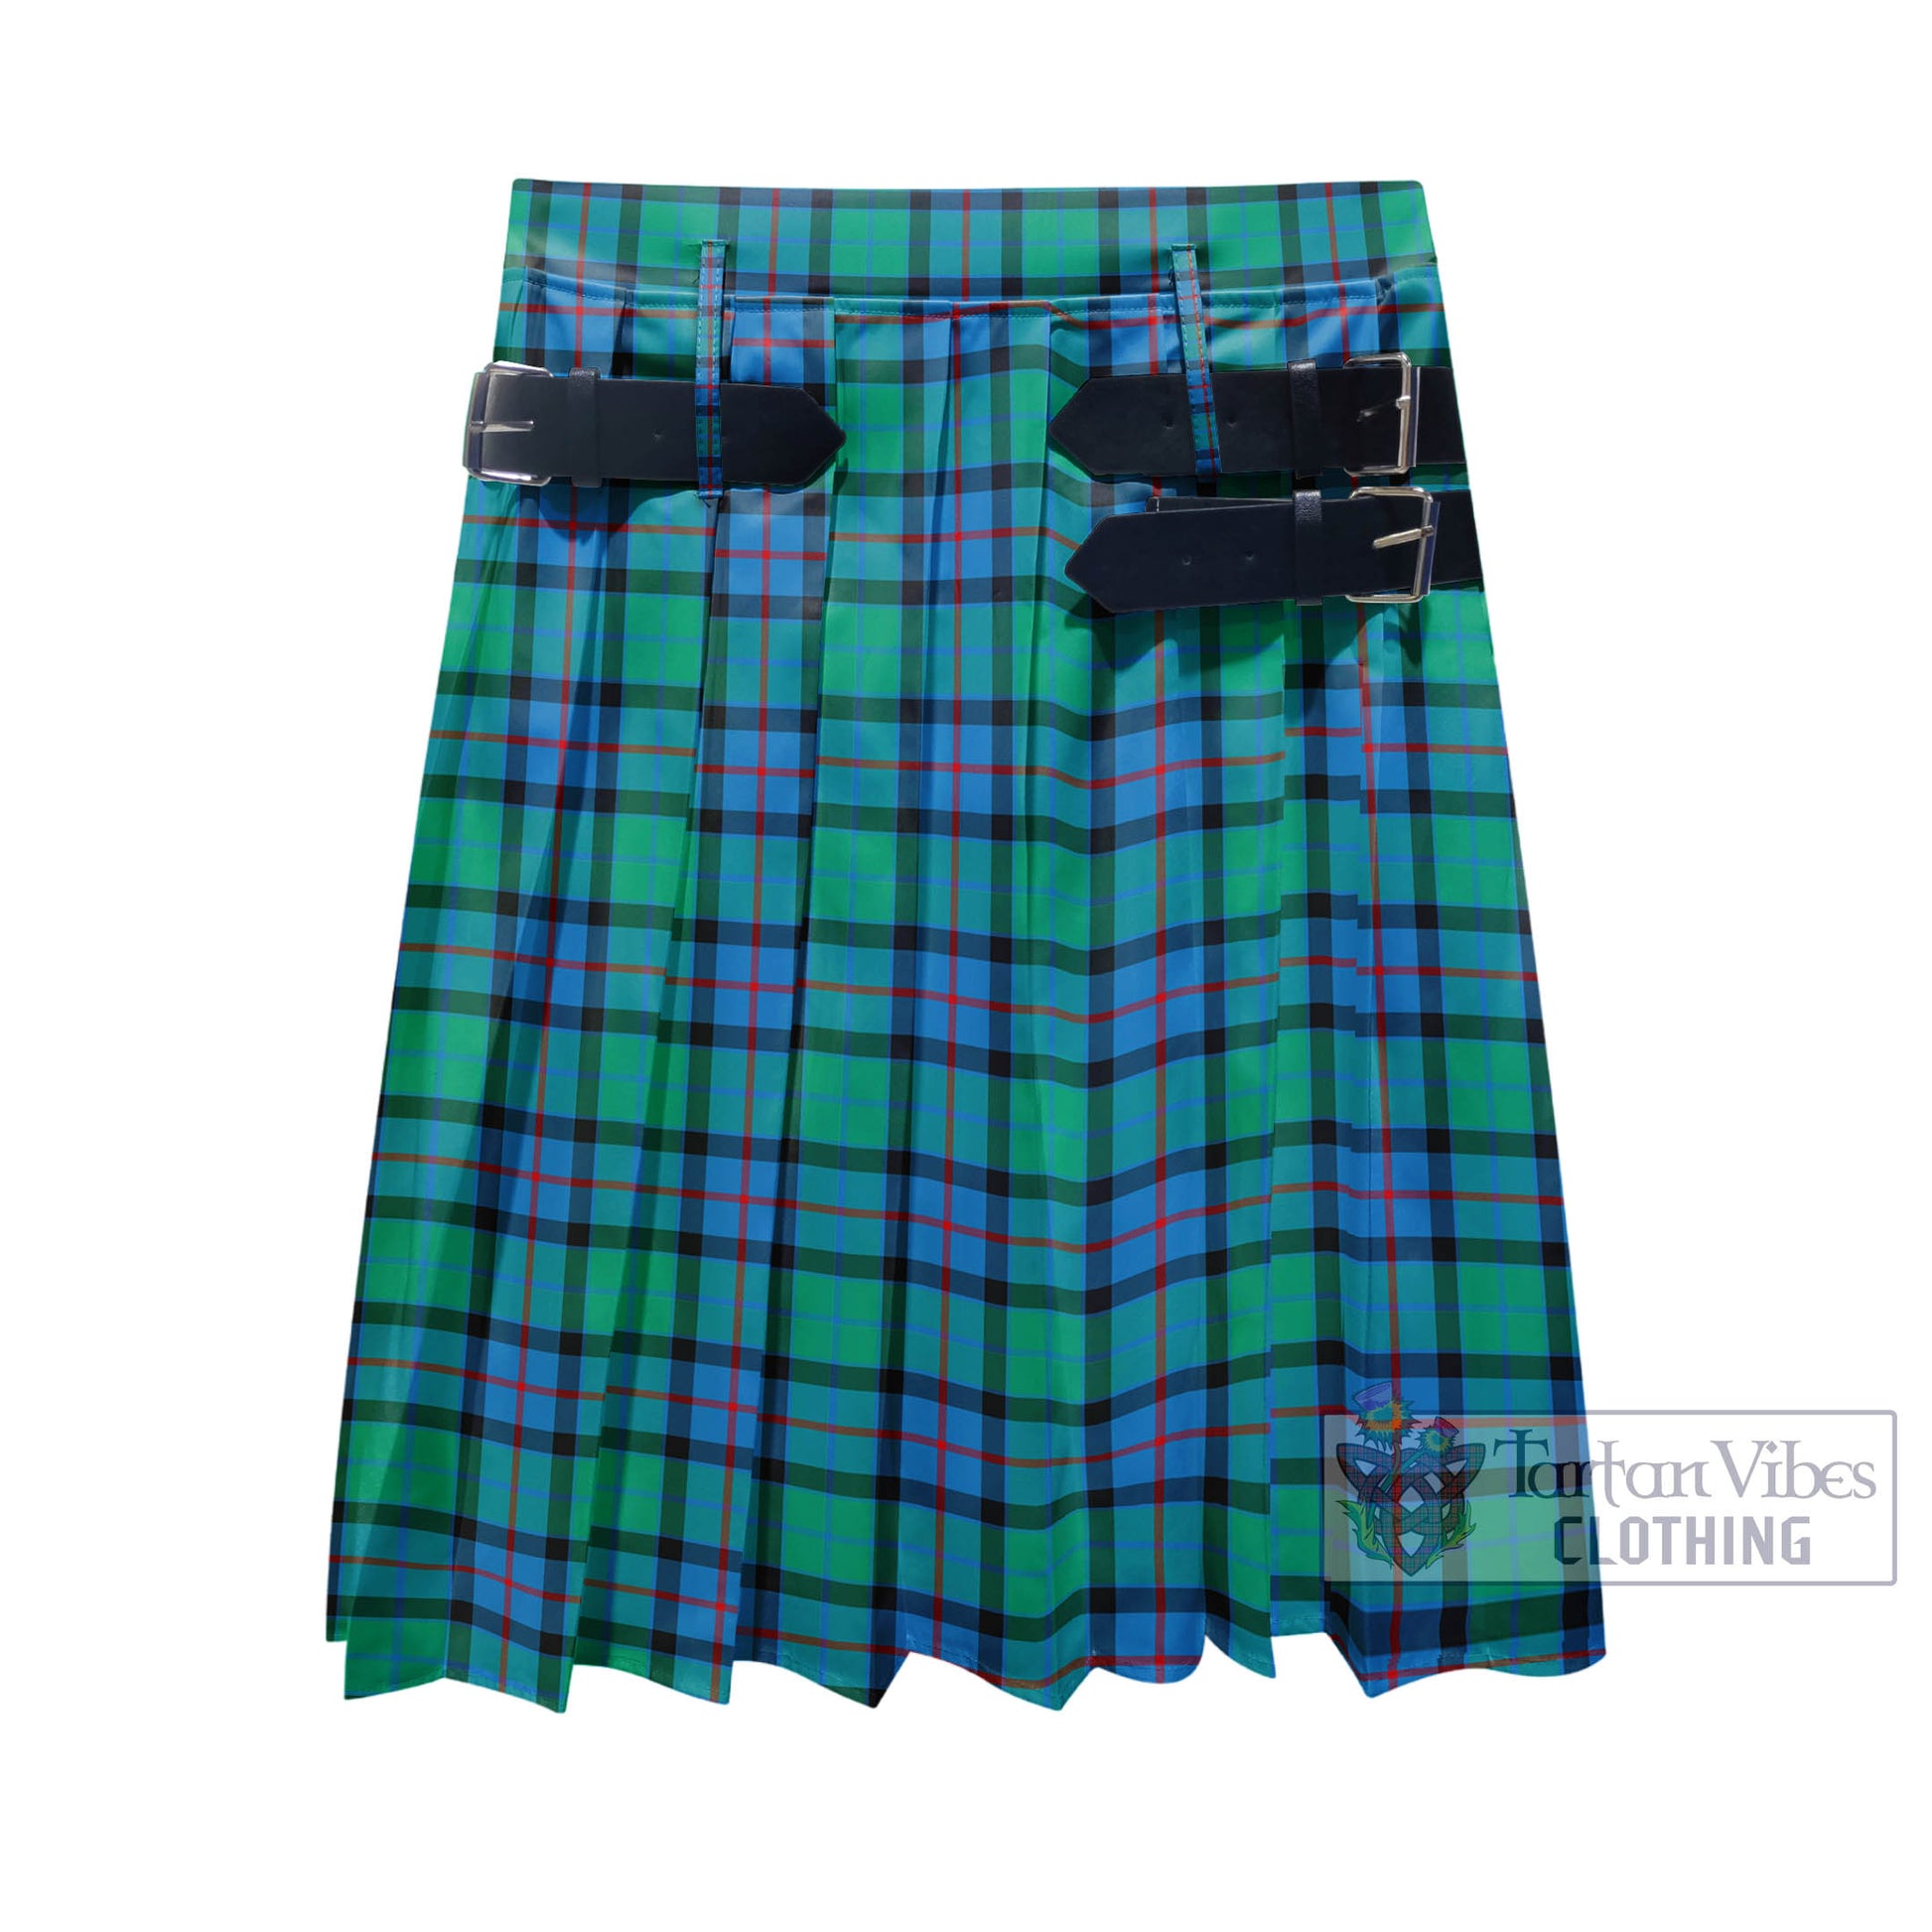 Tartan Vibes Clothing Flower Of Scotland Tartan Men's Pleated Skirt - Fashion Casual Retro Scottish Style